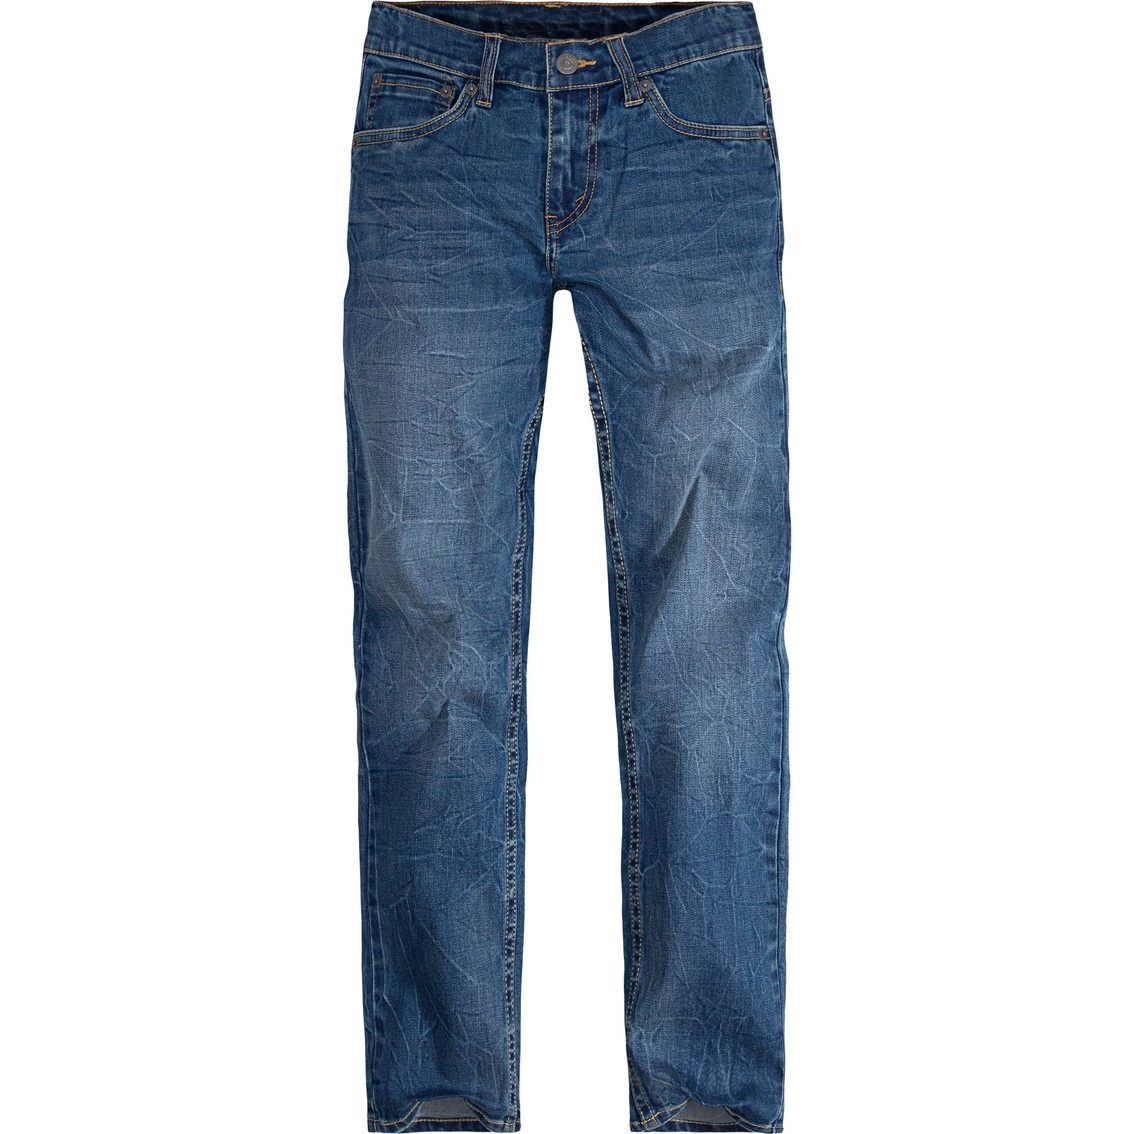 levis 502 regular taper jeans